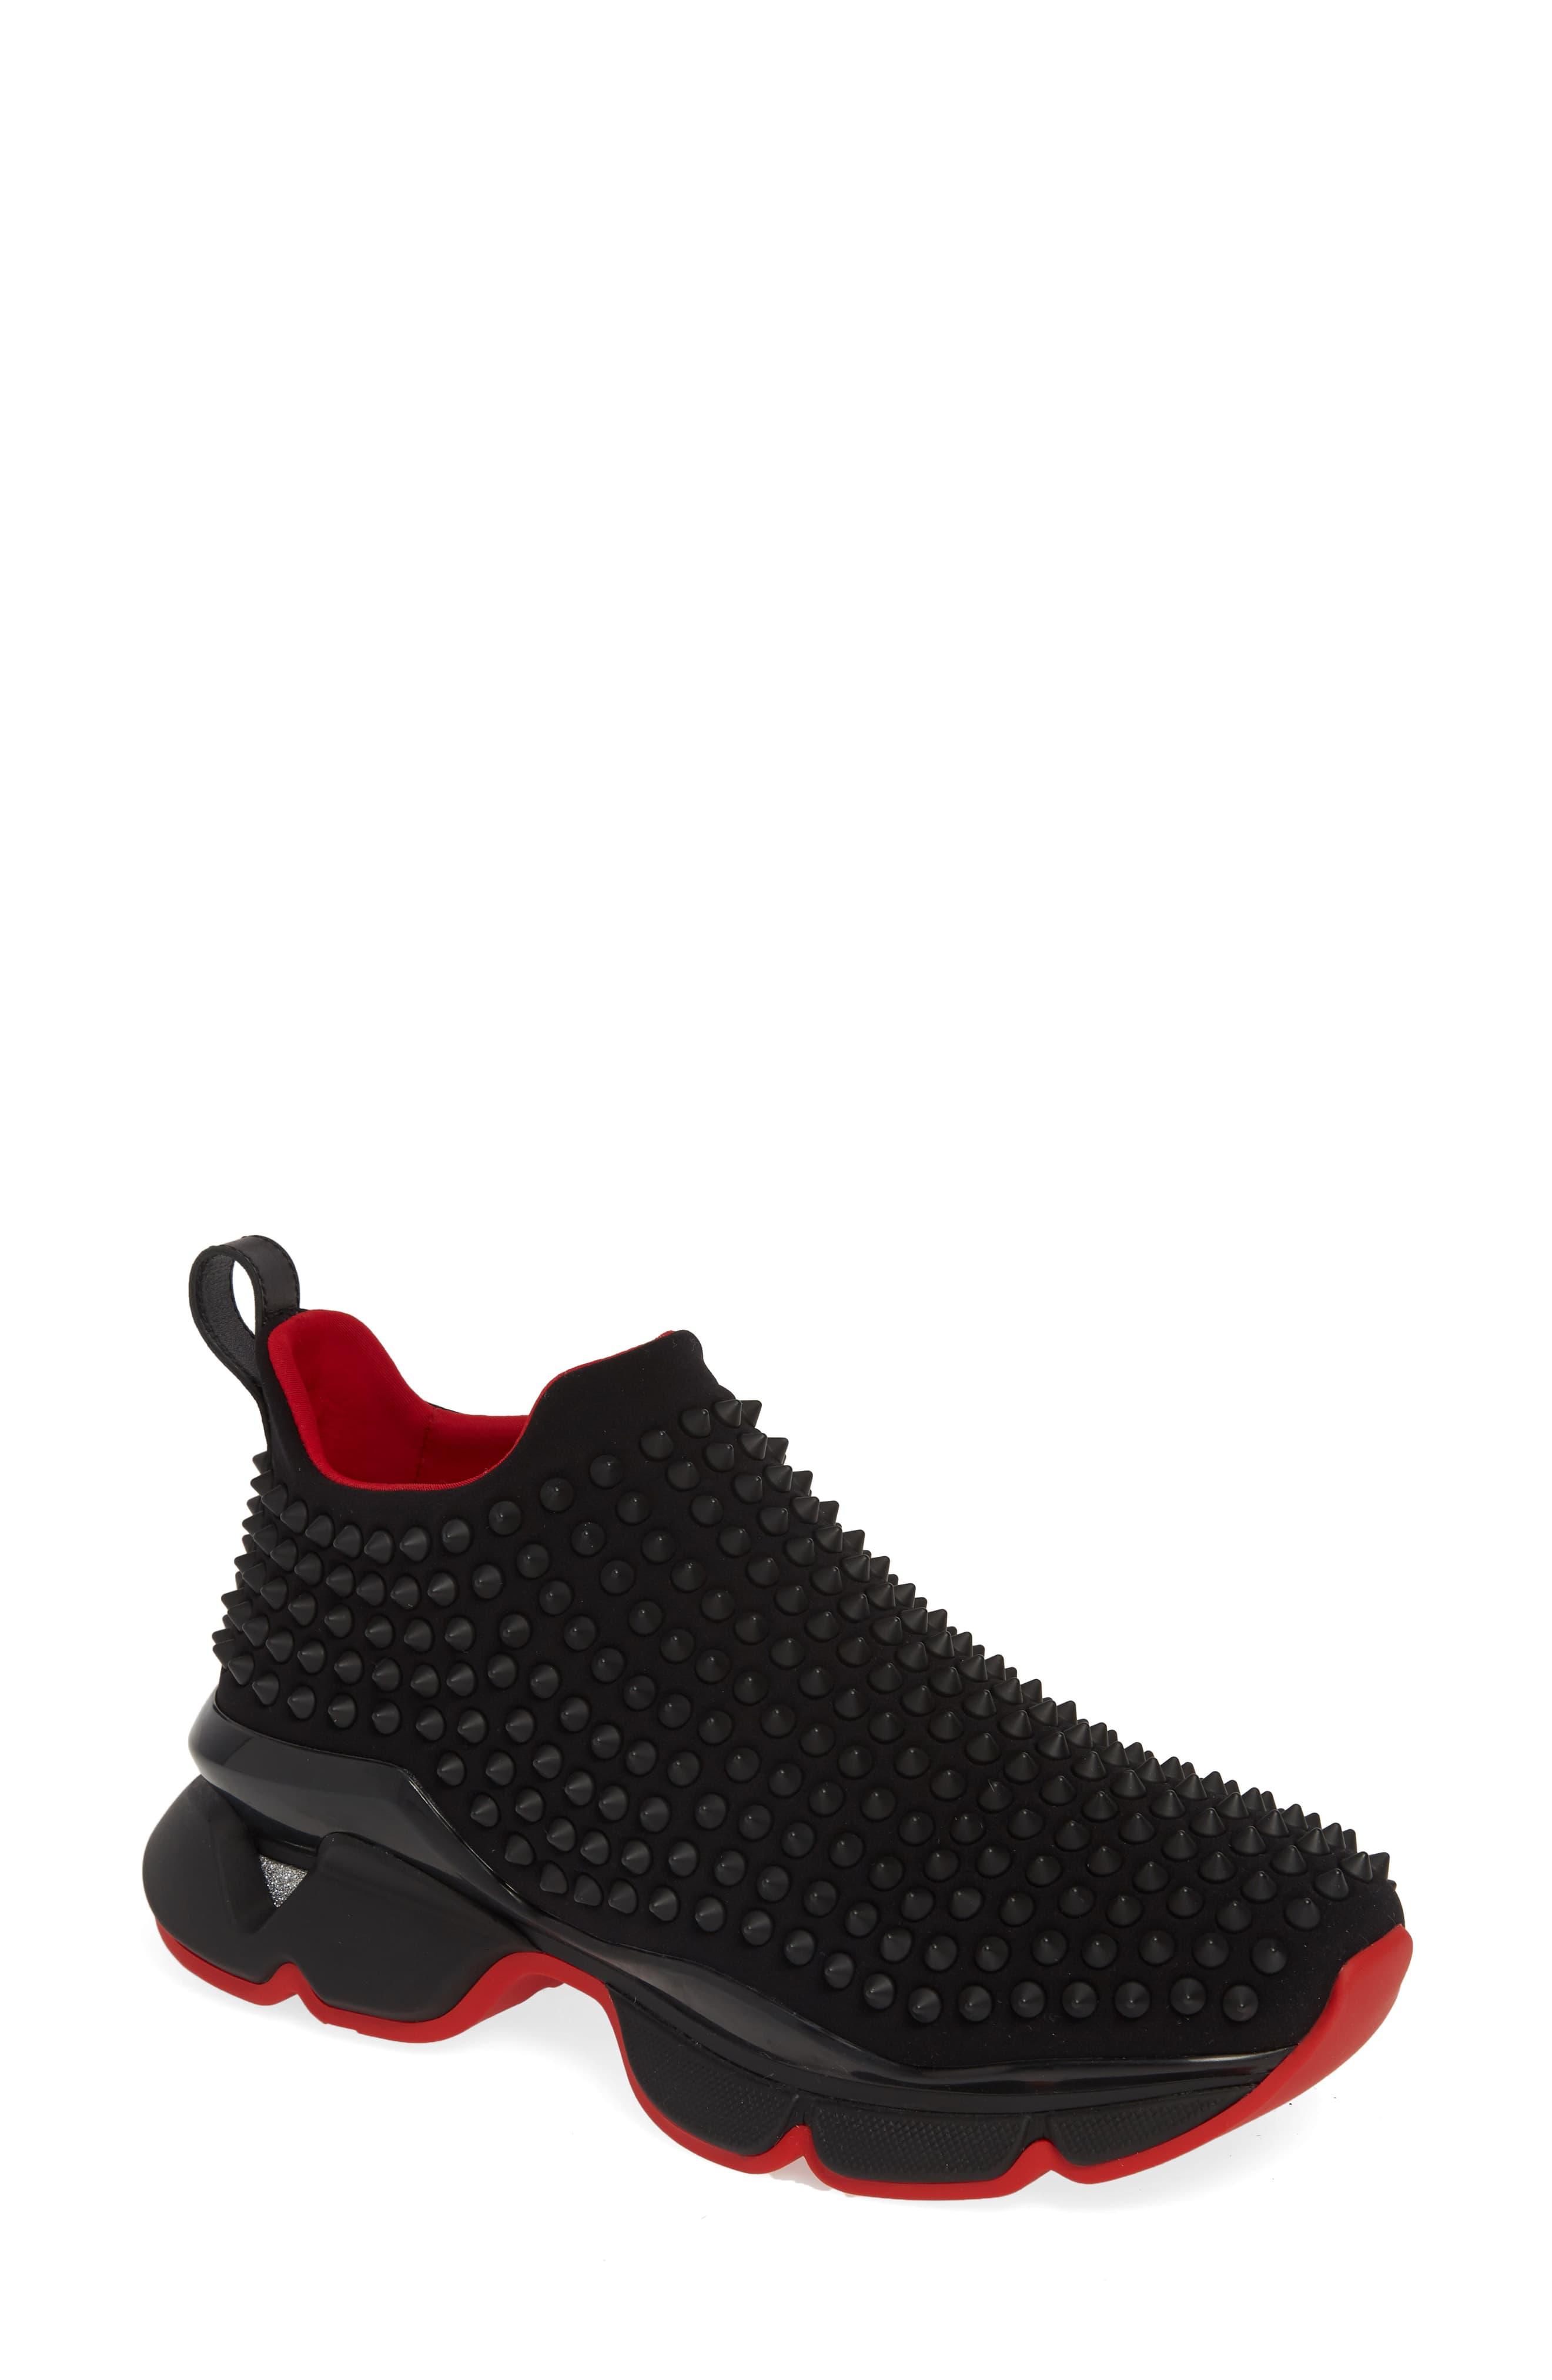 Christian Louboutin Spike Sock Donna Flat Sneakers in Black | Lyst